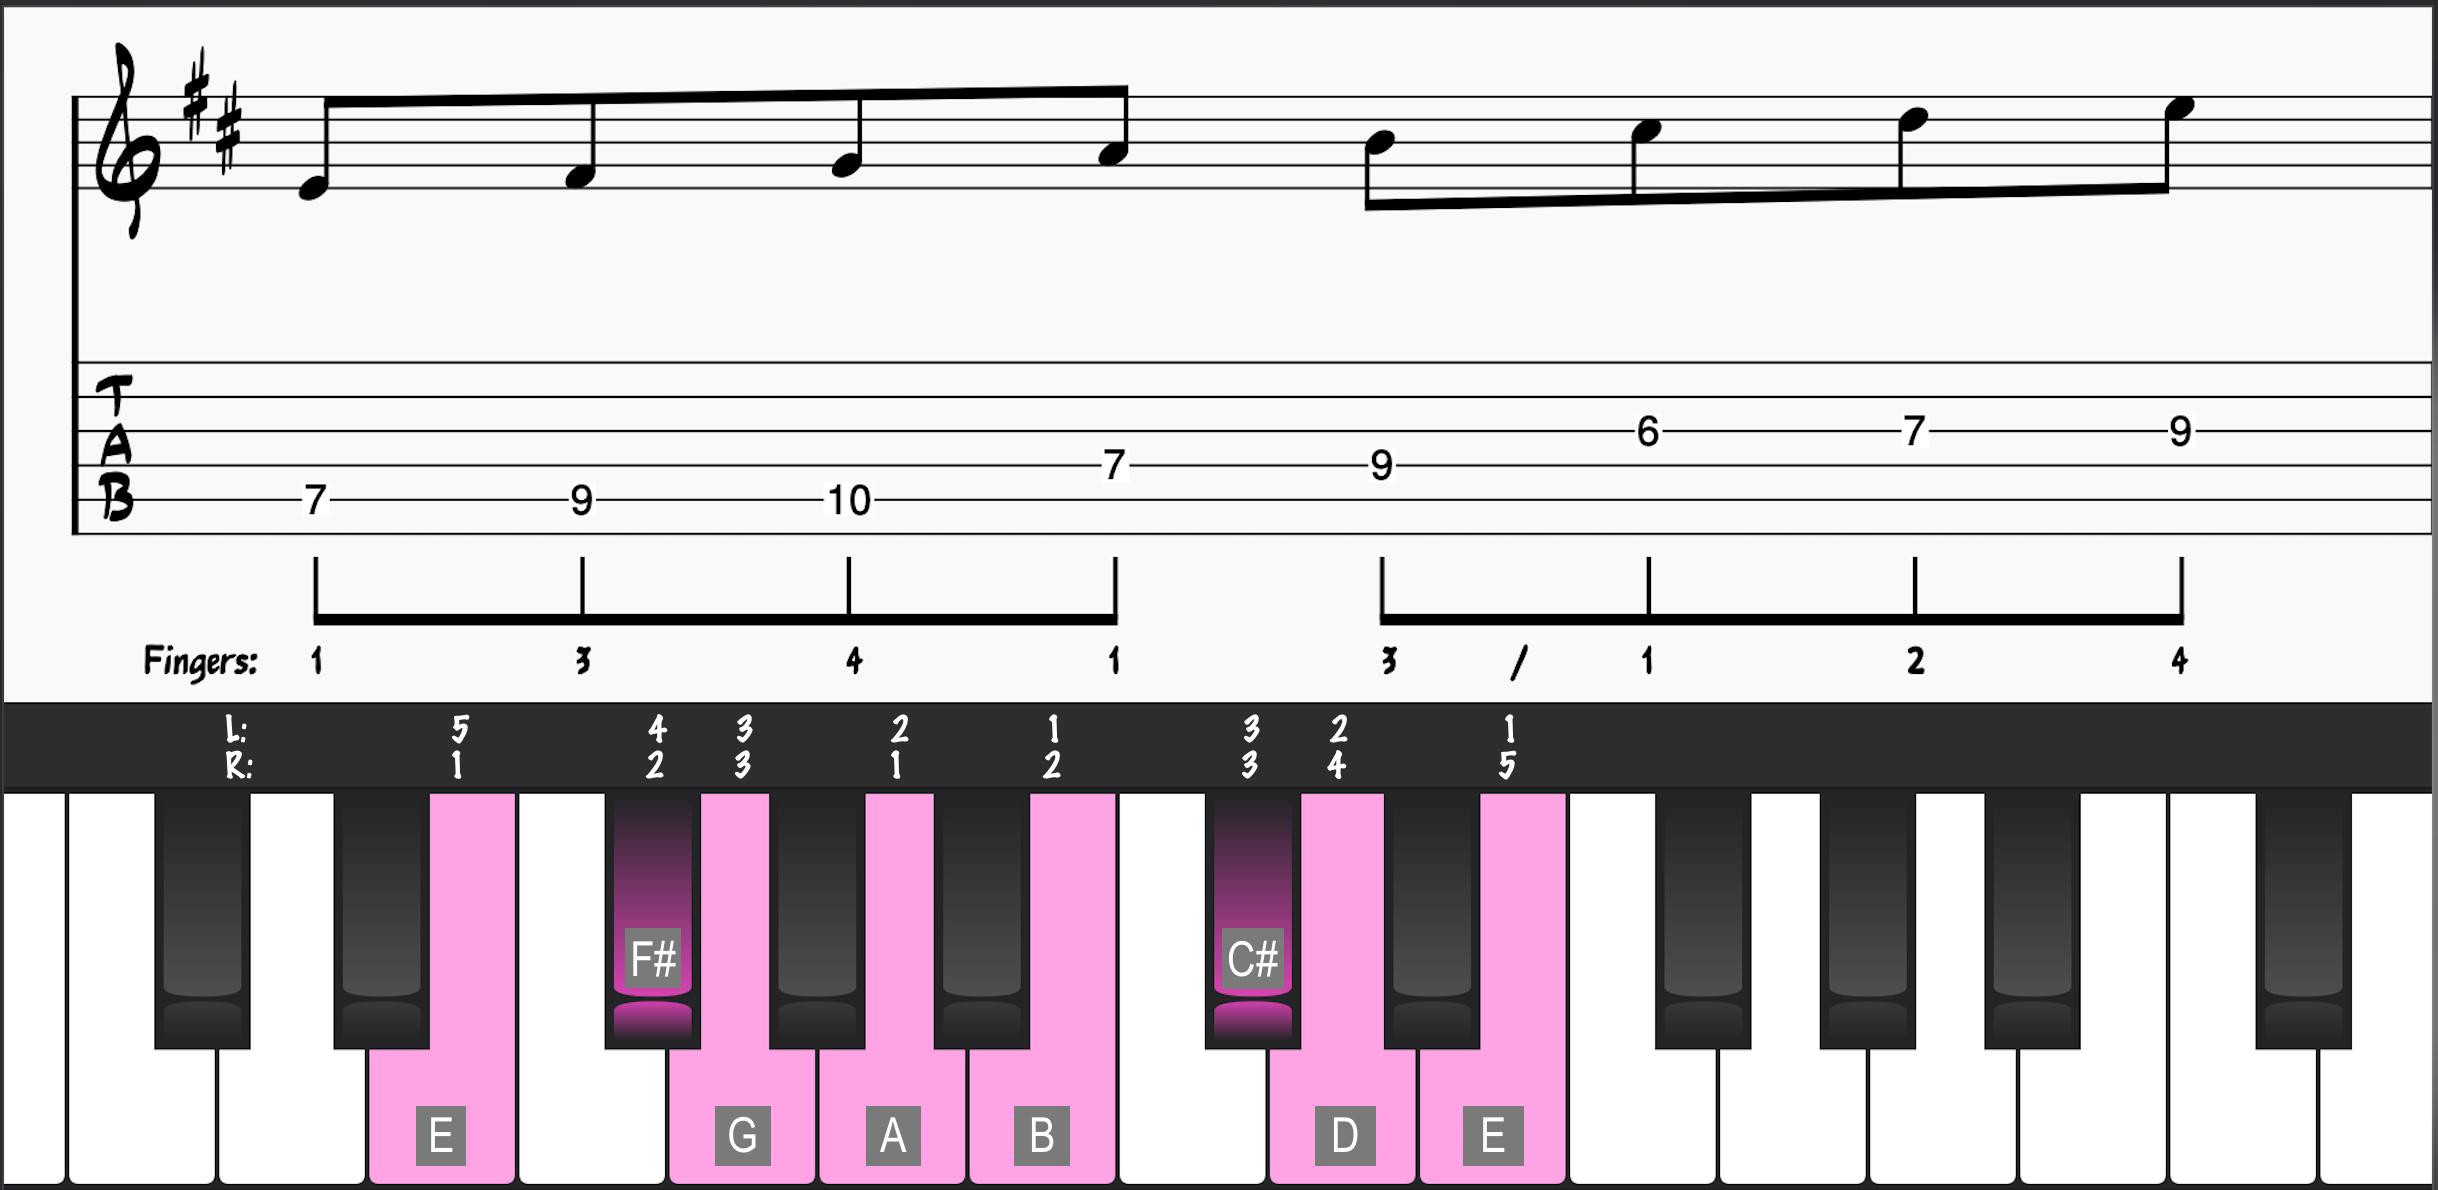 E Dorian Mode wth Piano and Guitar Fingerings